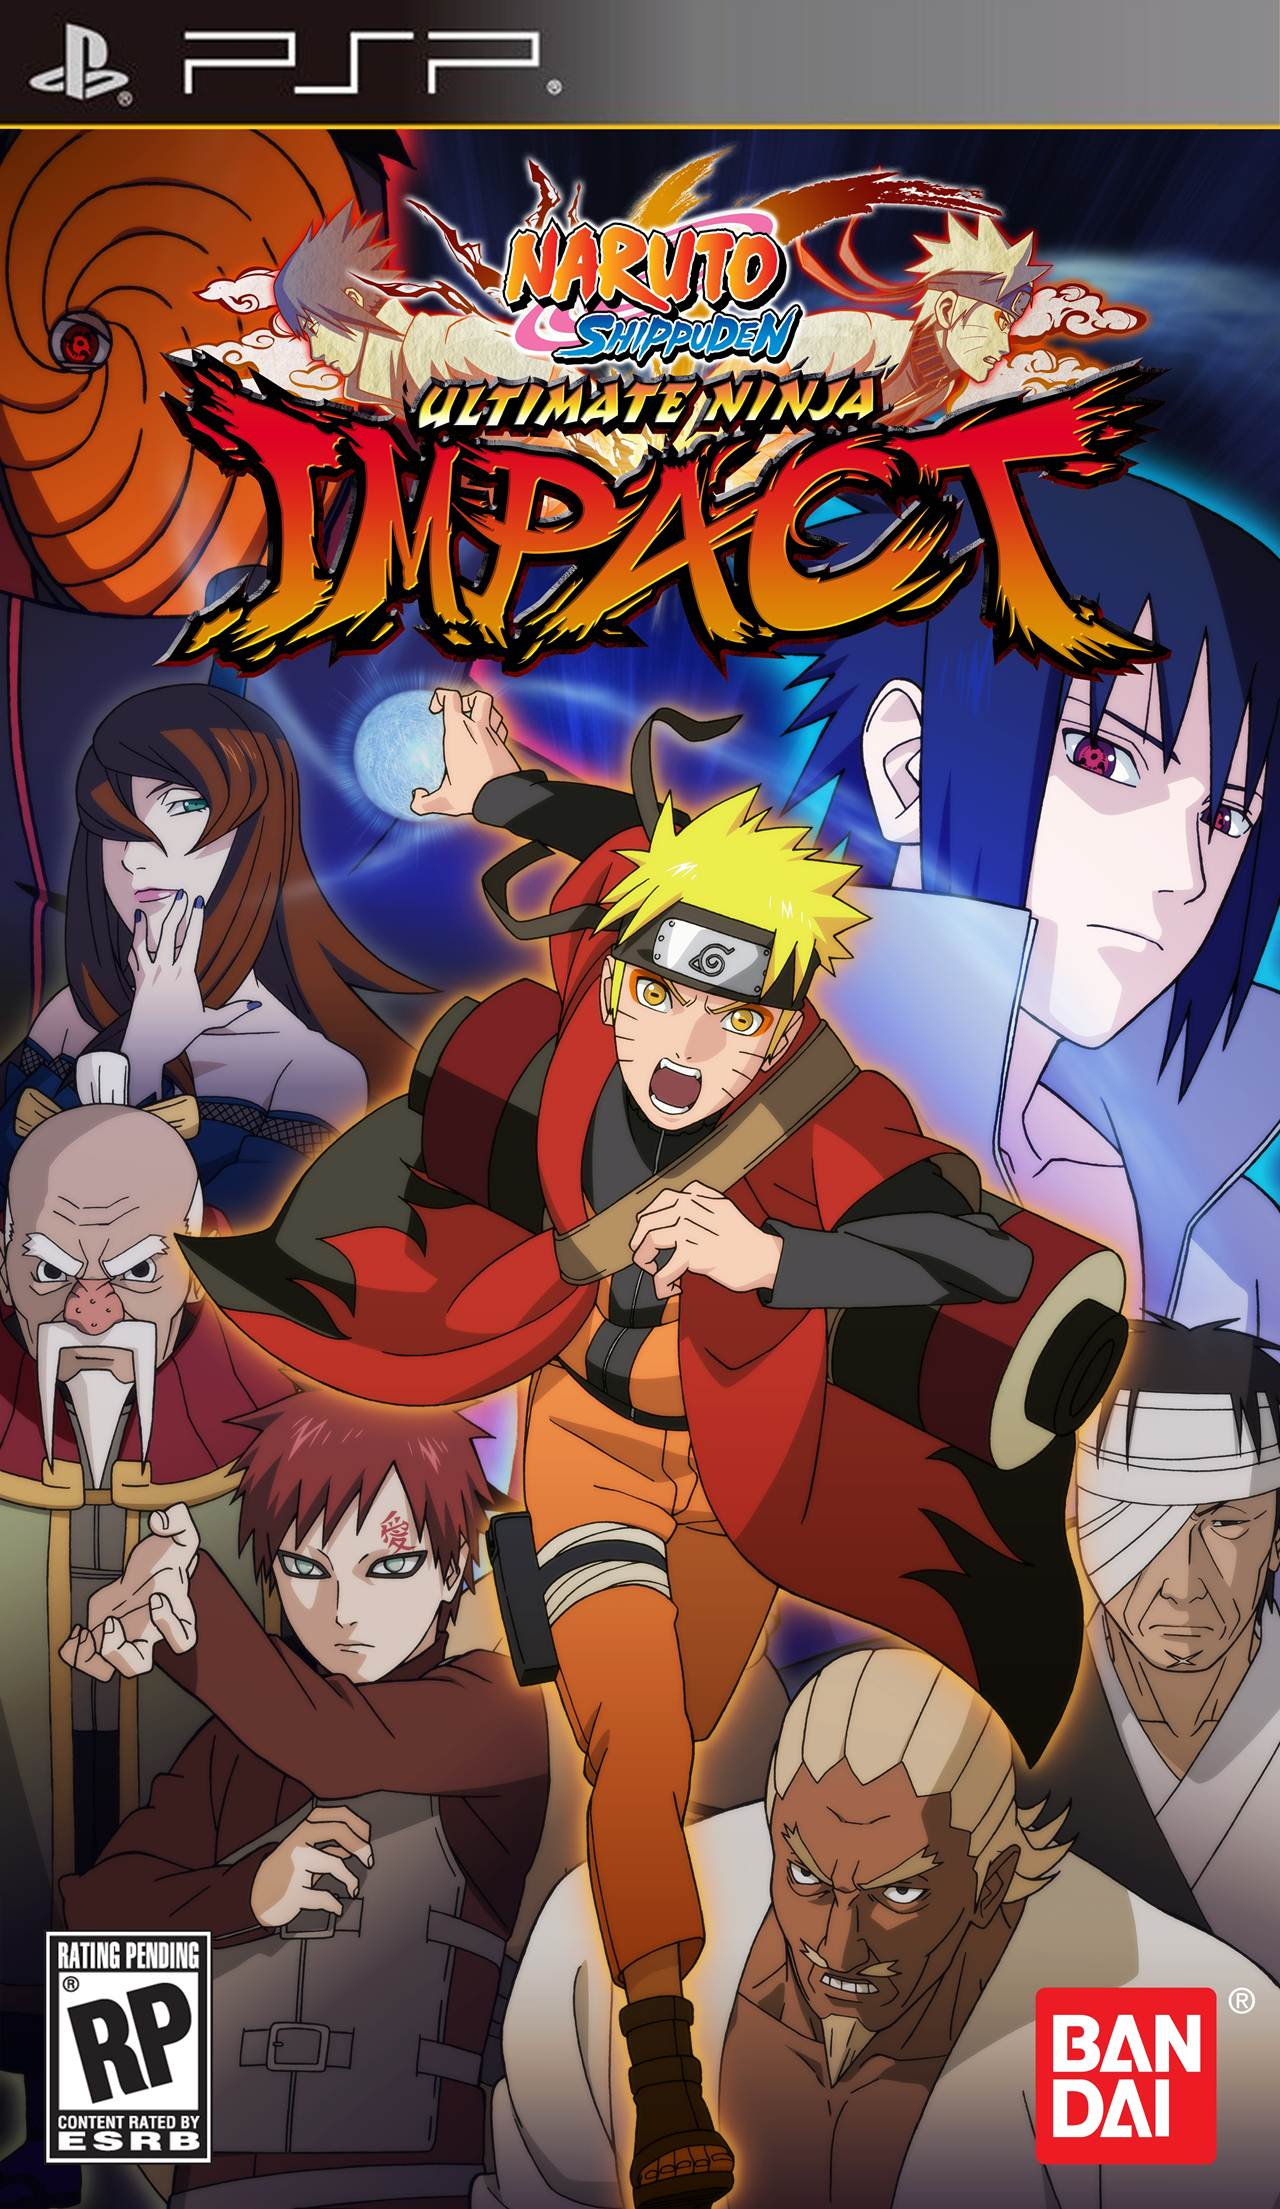 Dicas para Naruto Online: Como conseguir novo(s) Ninja(s)